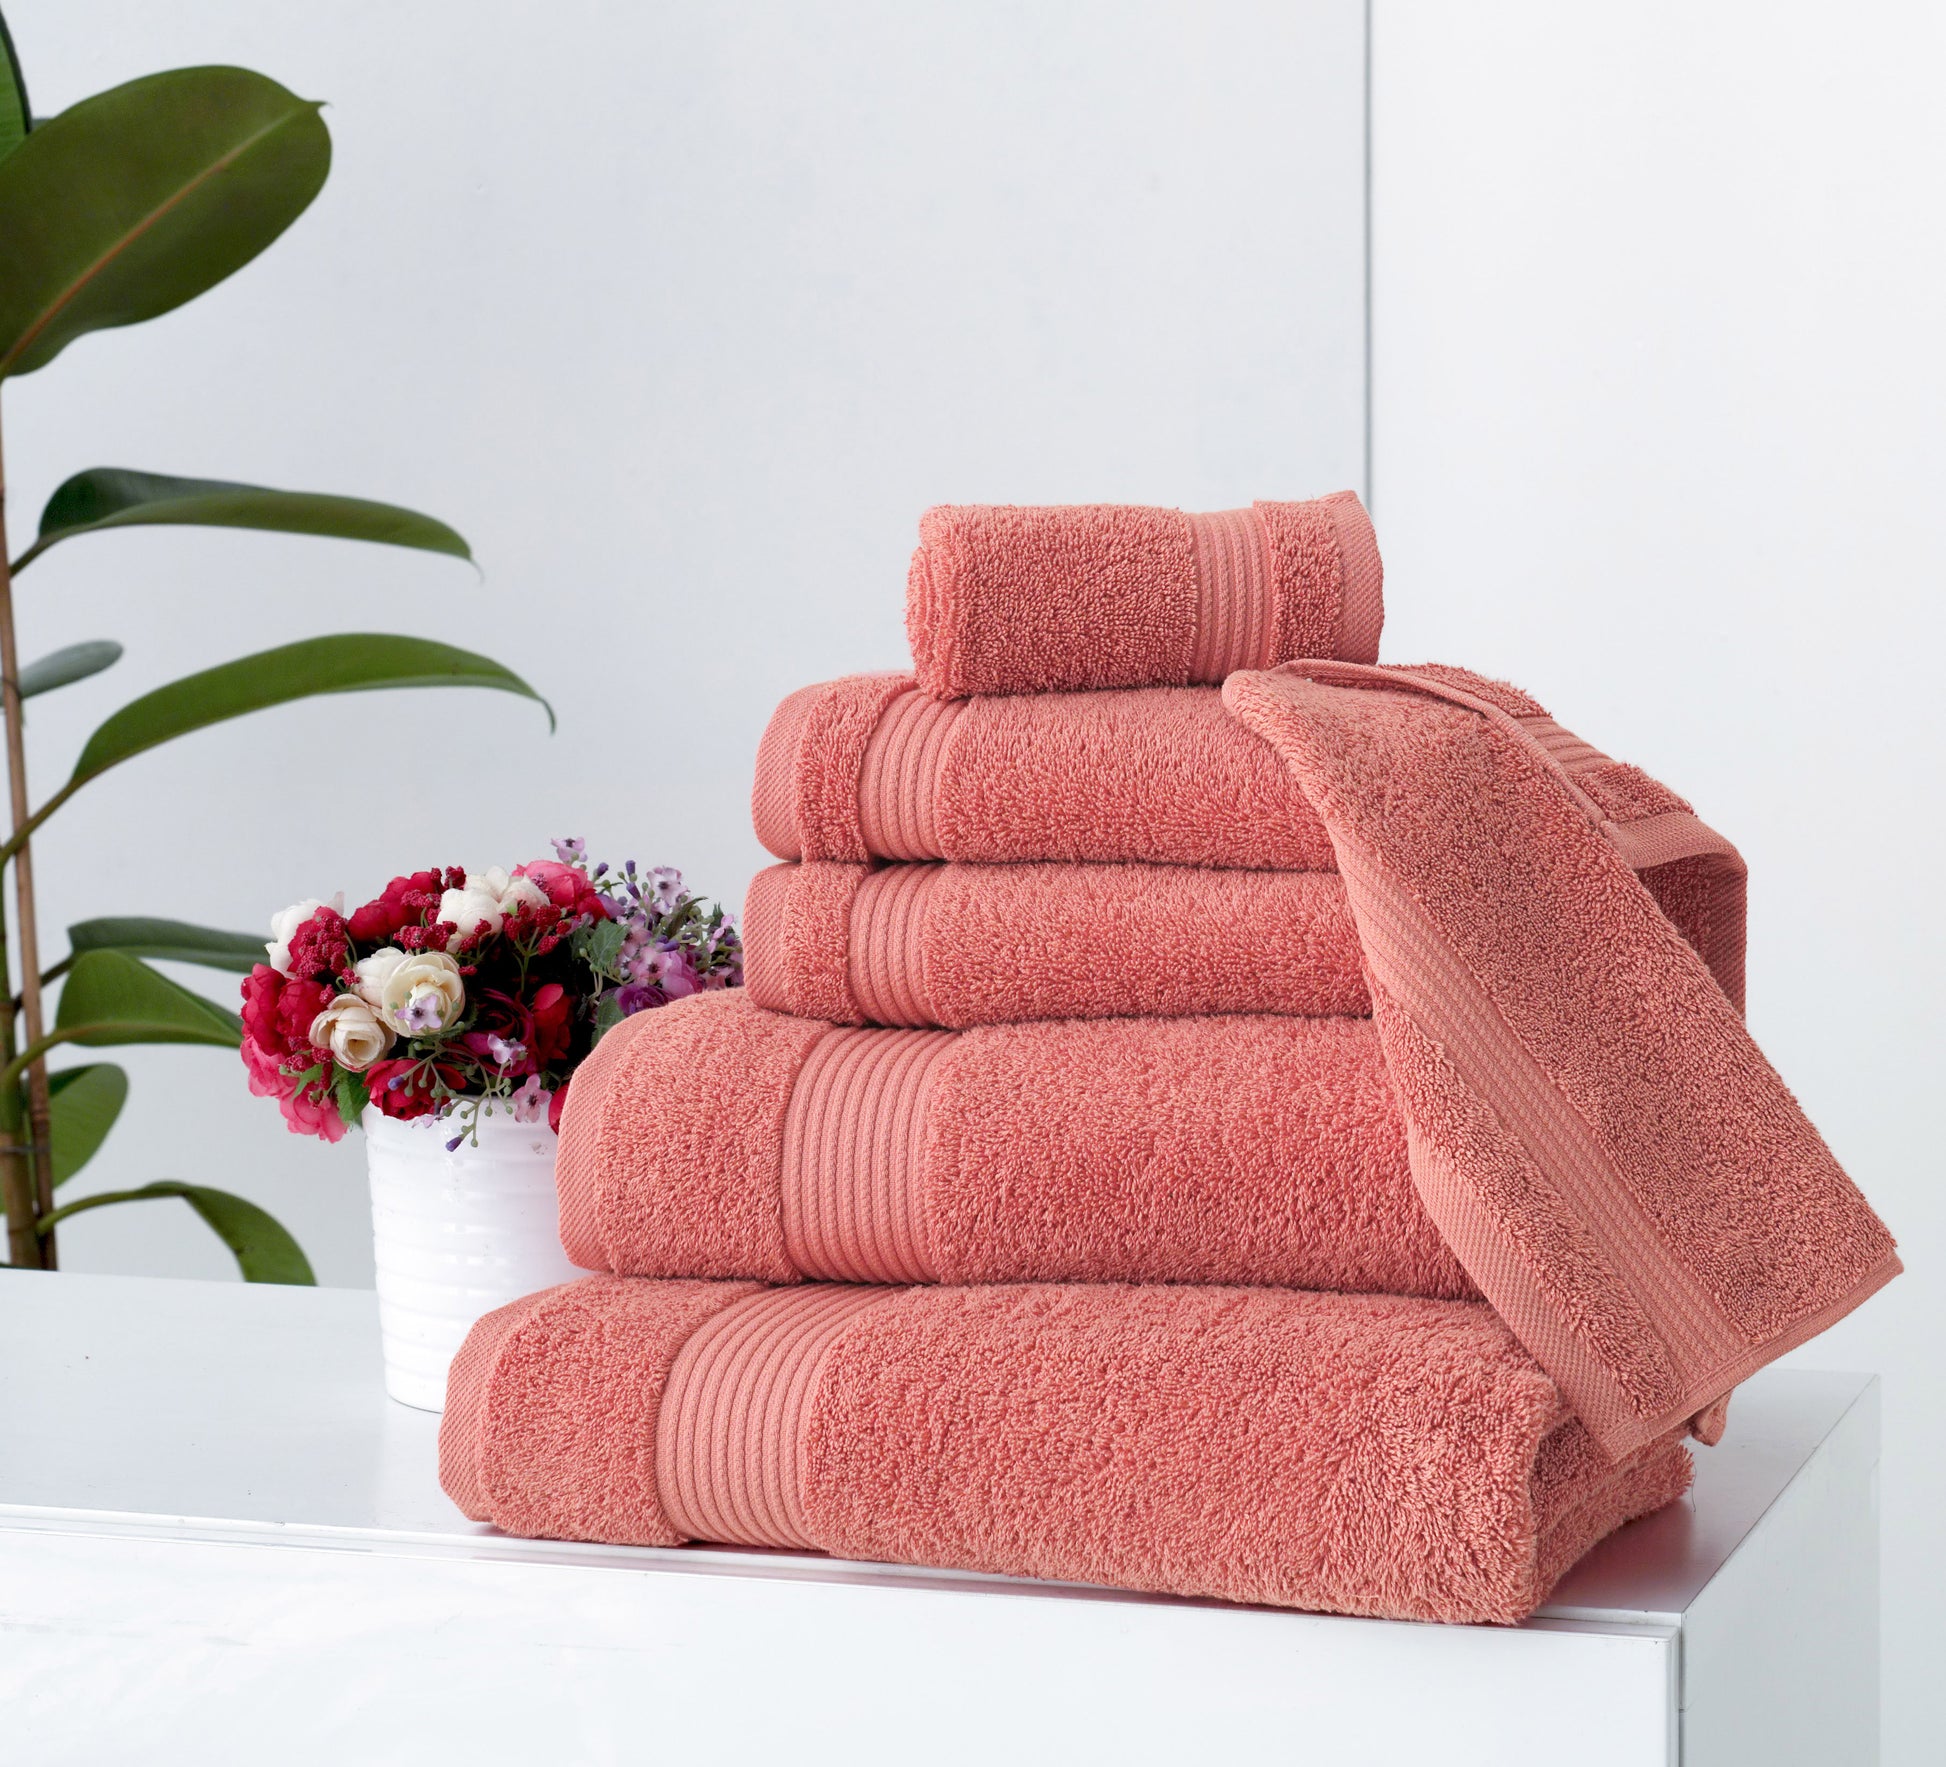 SALBAKOS 6 Piece Bath Towel Set - Turkish Luxury Hotel & Spa